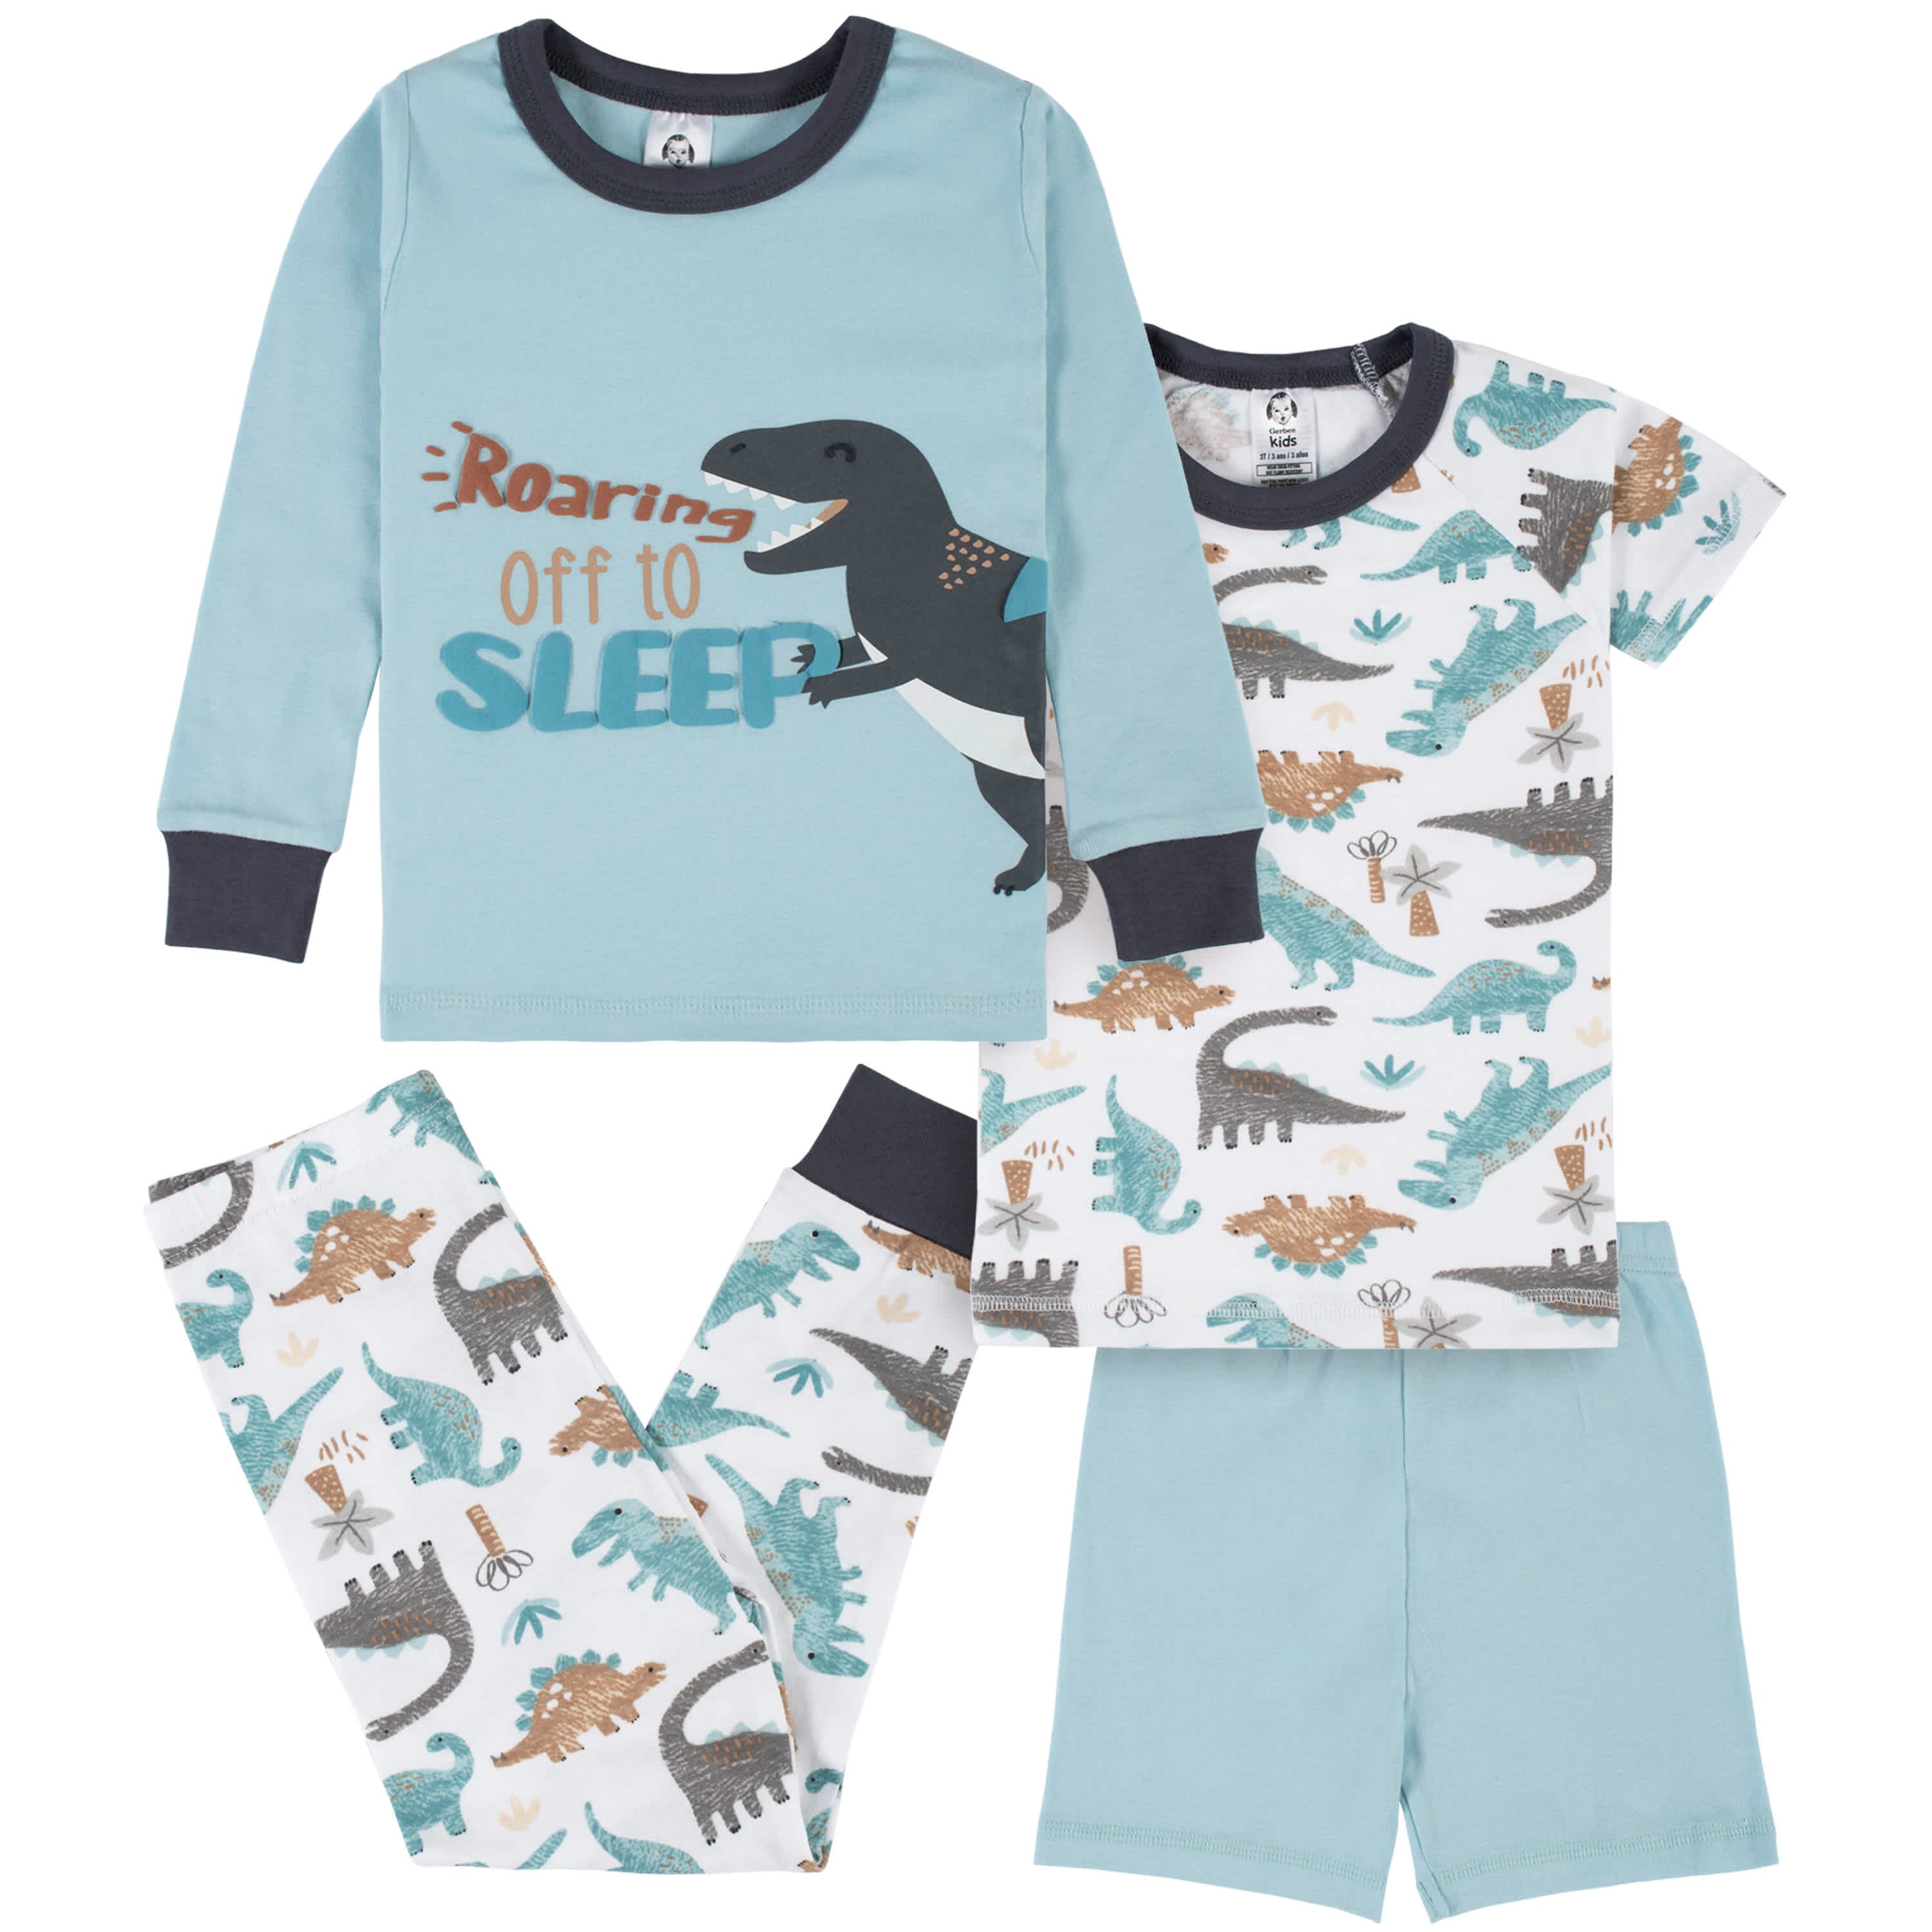 Kids Pajamas Dinosaur Children Pajamas for Boys Girls Unisex Cotton Pjs Summer Sleepwear Set Size 2T 3T 4 5 7 8 